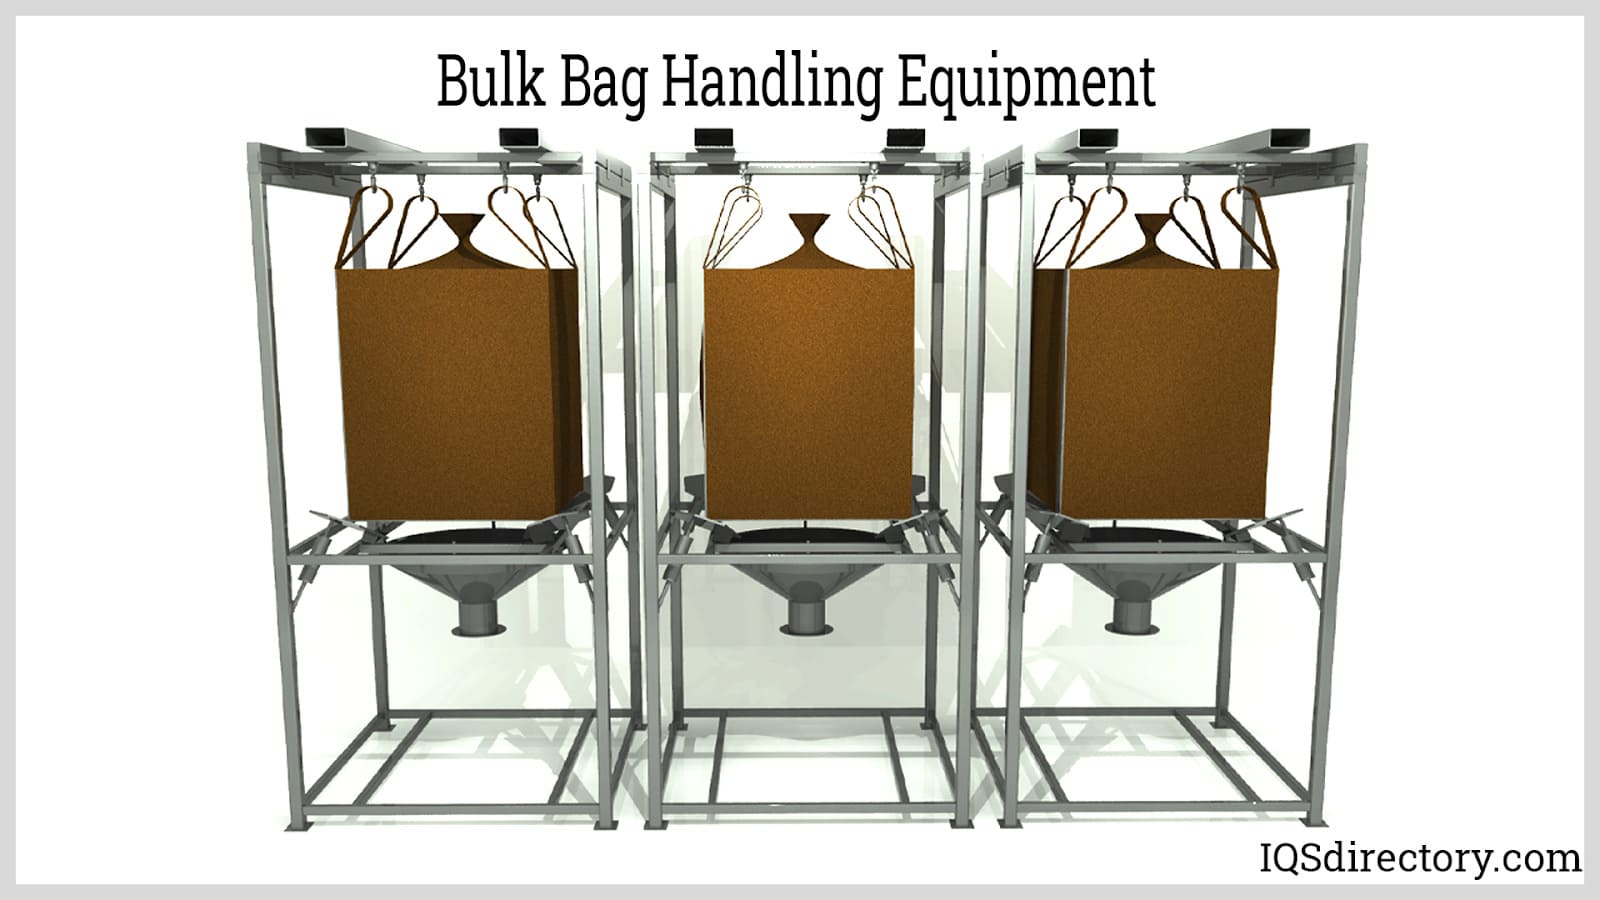 https://www.iqsdirectory.com/articles/pneumatic-conveyor/bulk-bag-equipment/bulk-bag-handling-equipment.jpg